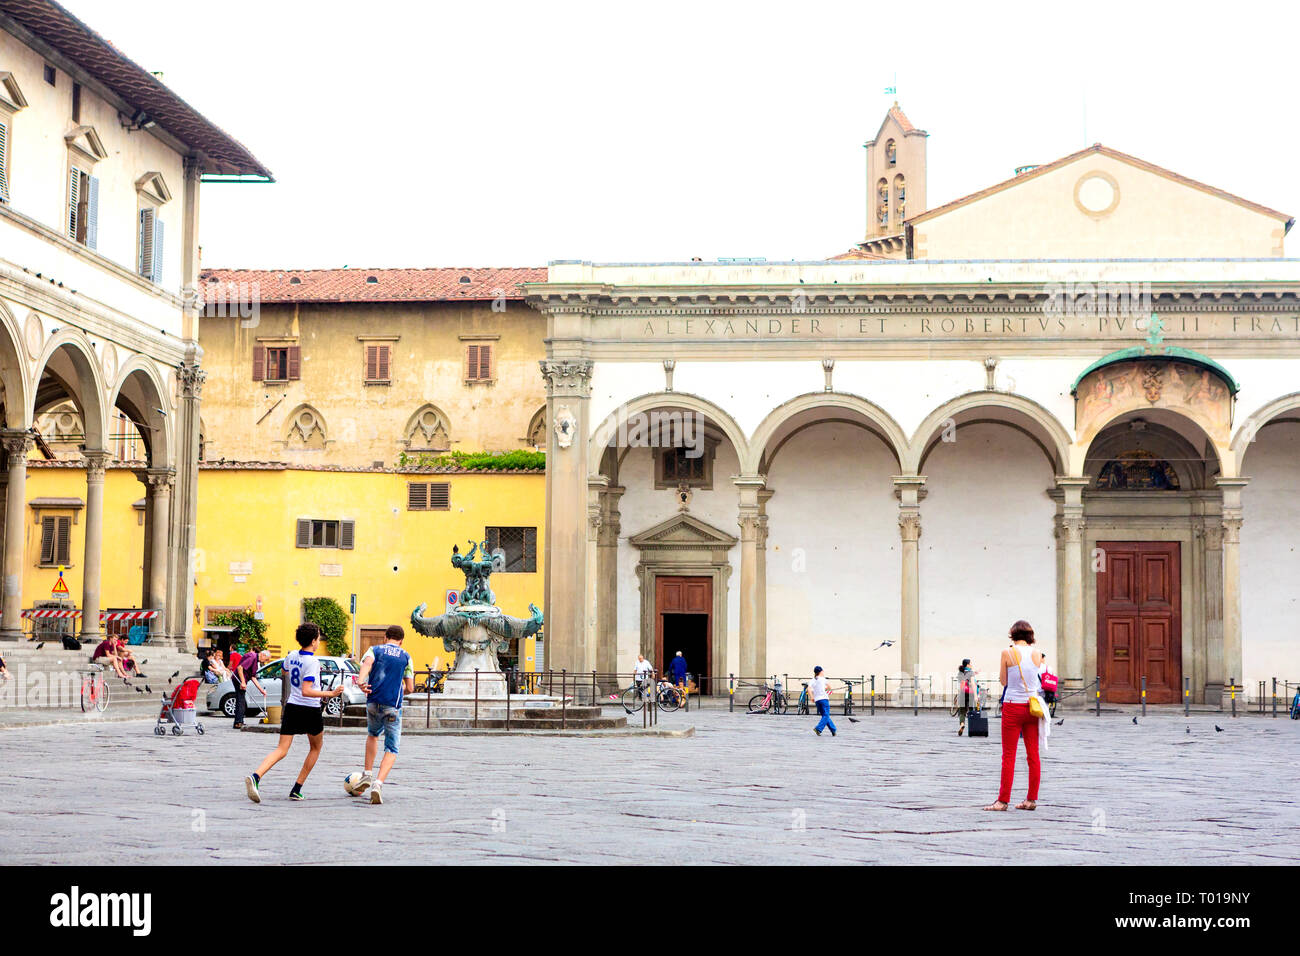 Teenaged boys kick a socerball around the Piazza della Santissima Annunziata, in Florence, in the region of Tuscany, Italy. Stock Photo